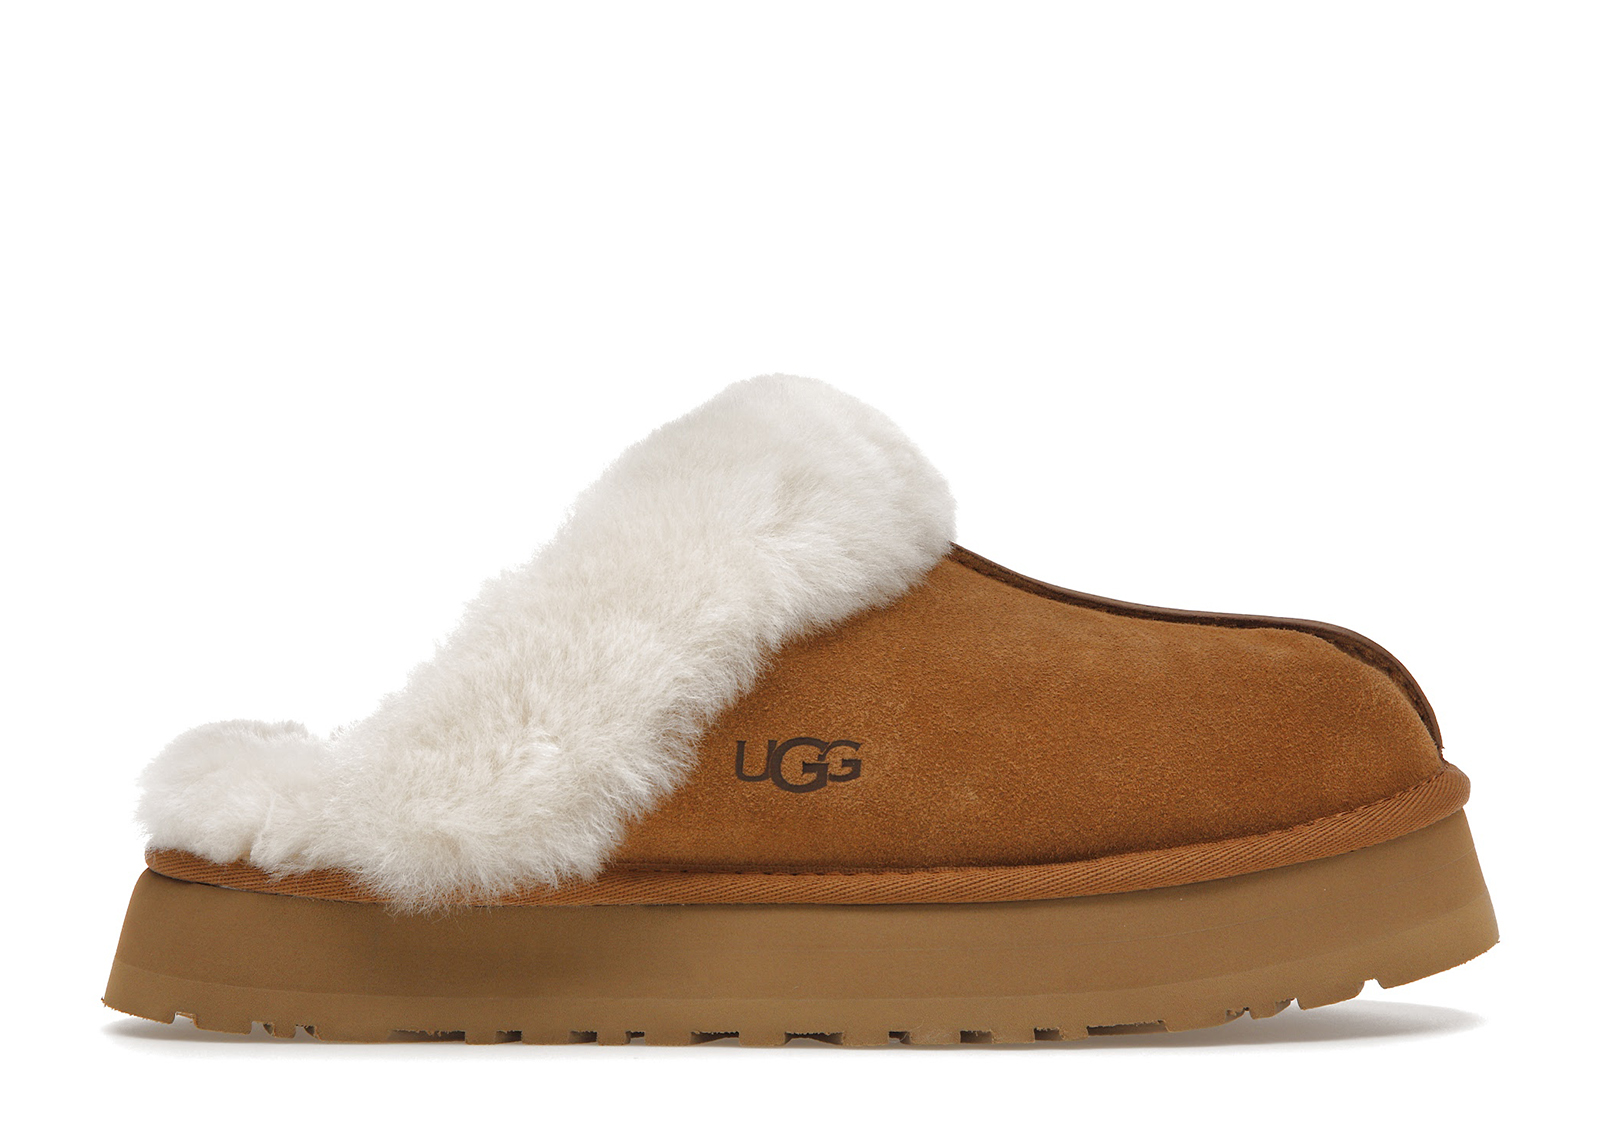 UGG Slippers Youth 4 Womens 5.5 Dakota Camo Slip On Loafers 1011370 Brown  Gray | eBay